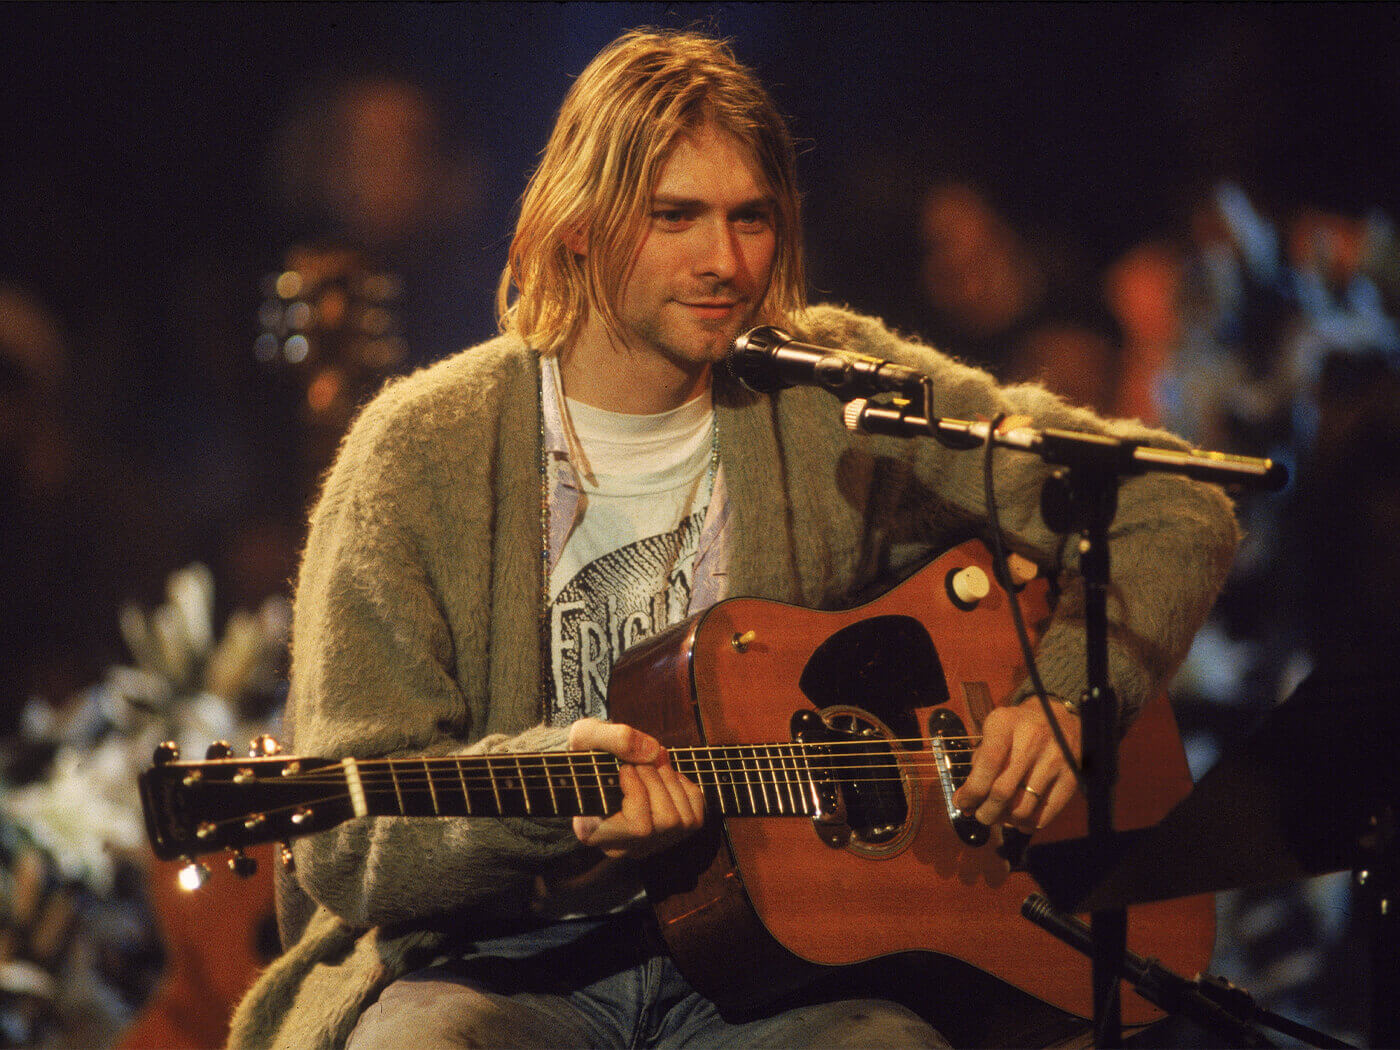 Kurt Cobain during MTV Unplugged performance